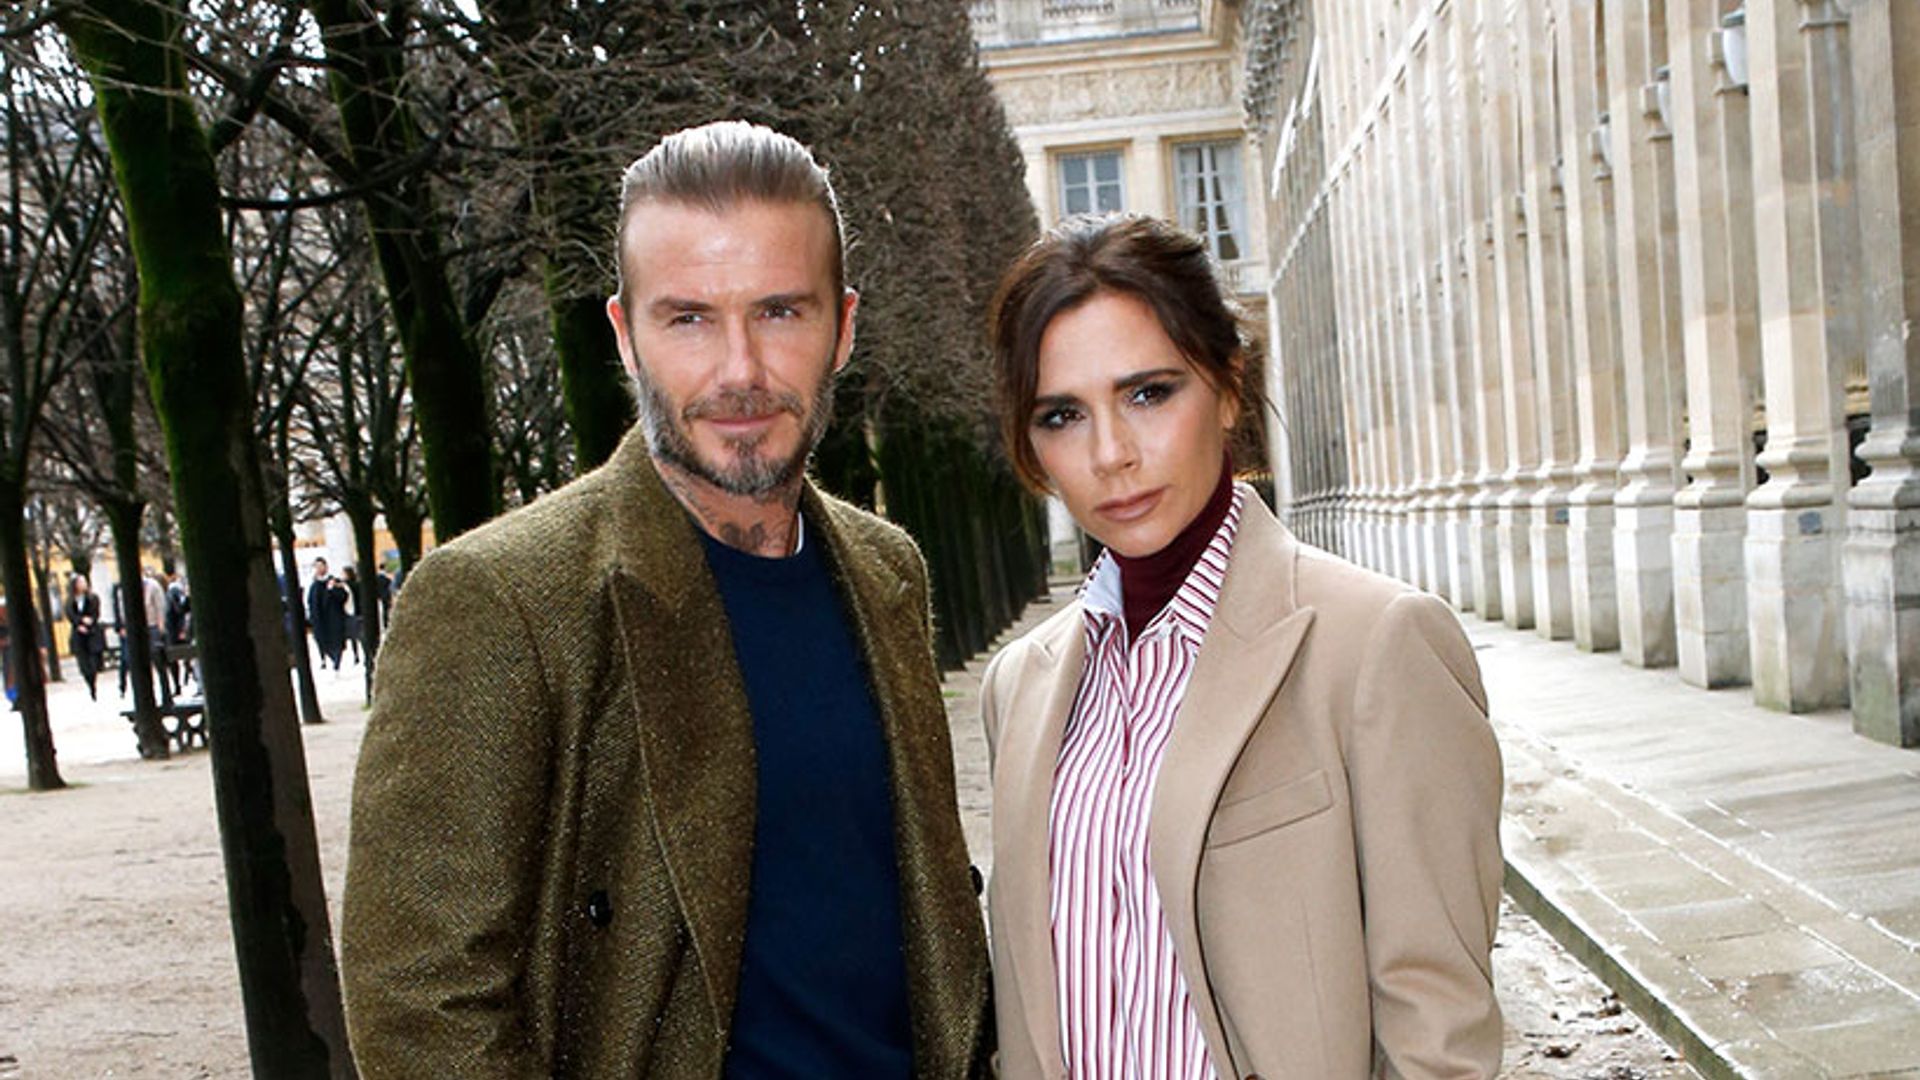 David and Victoria Beckham start work on a huge project together